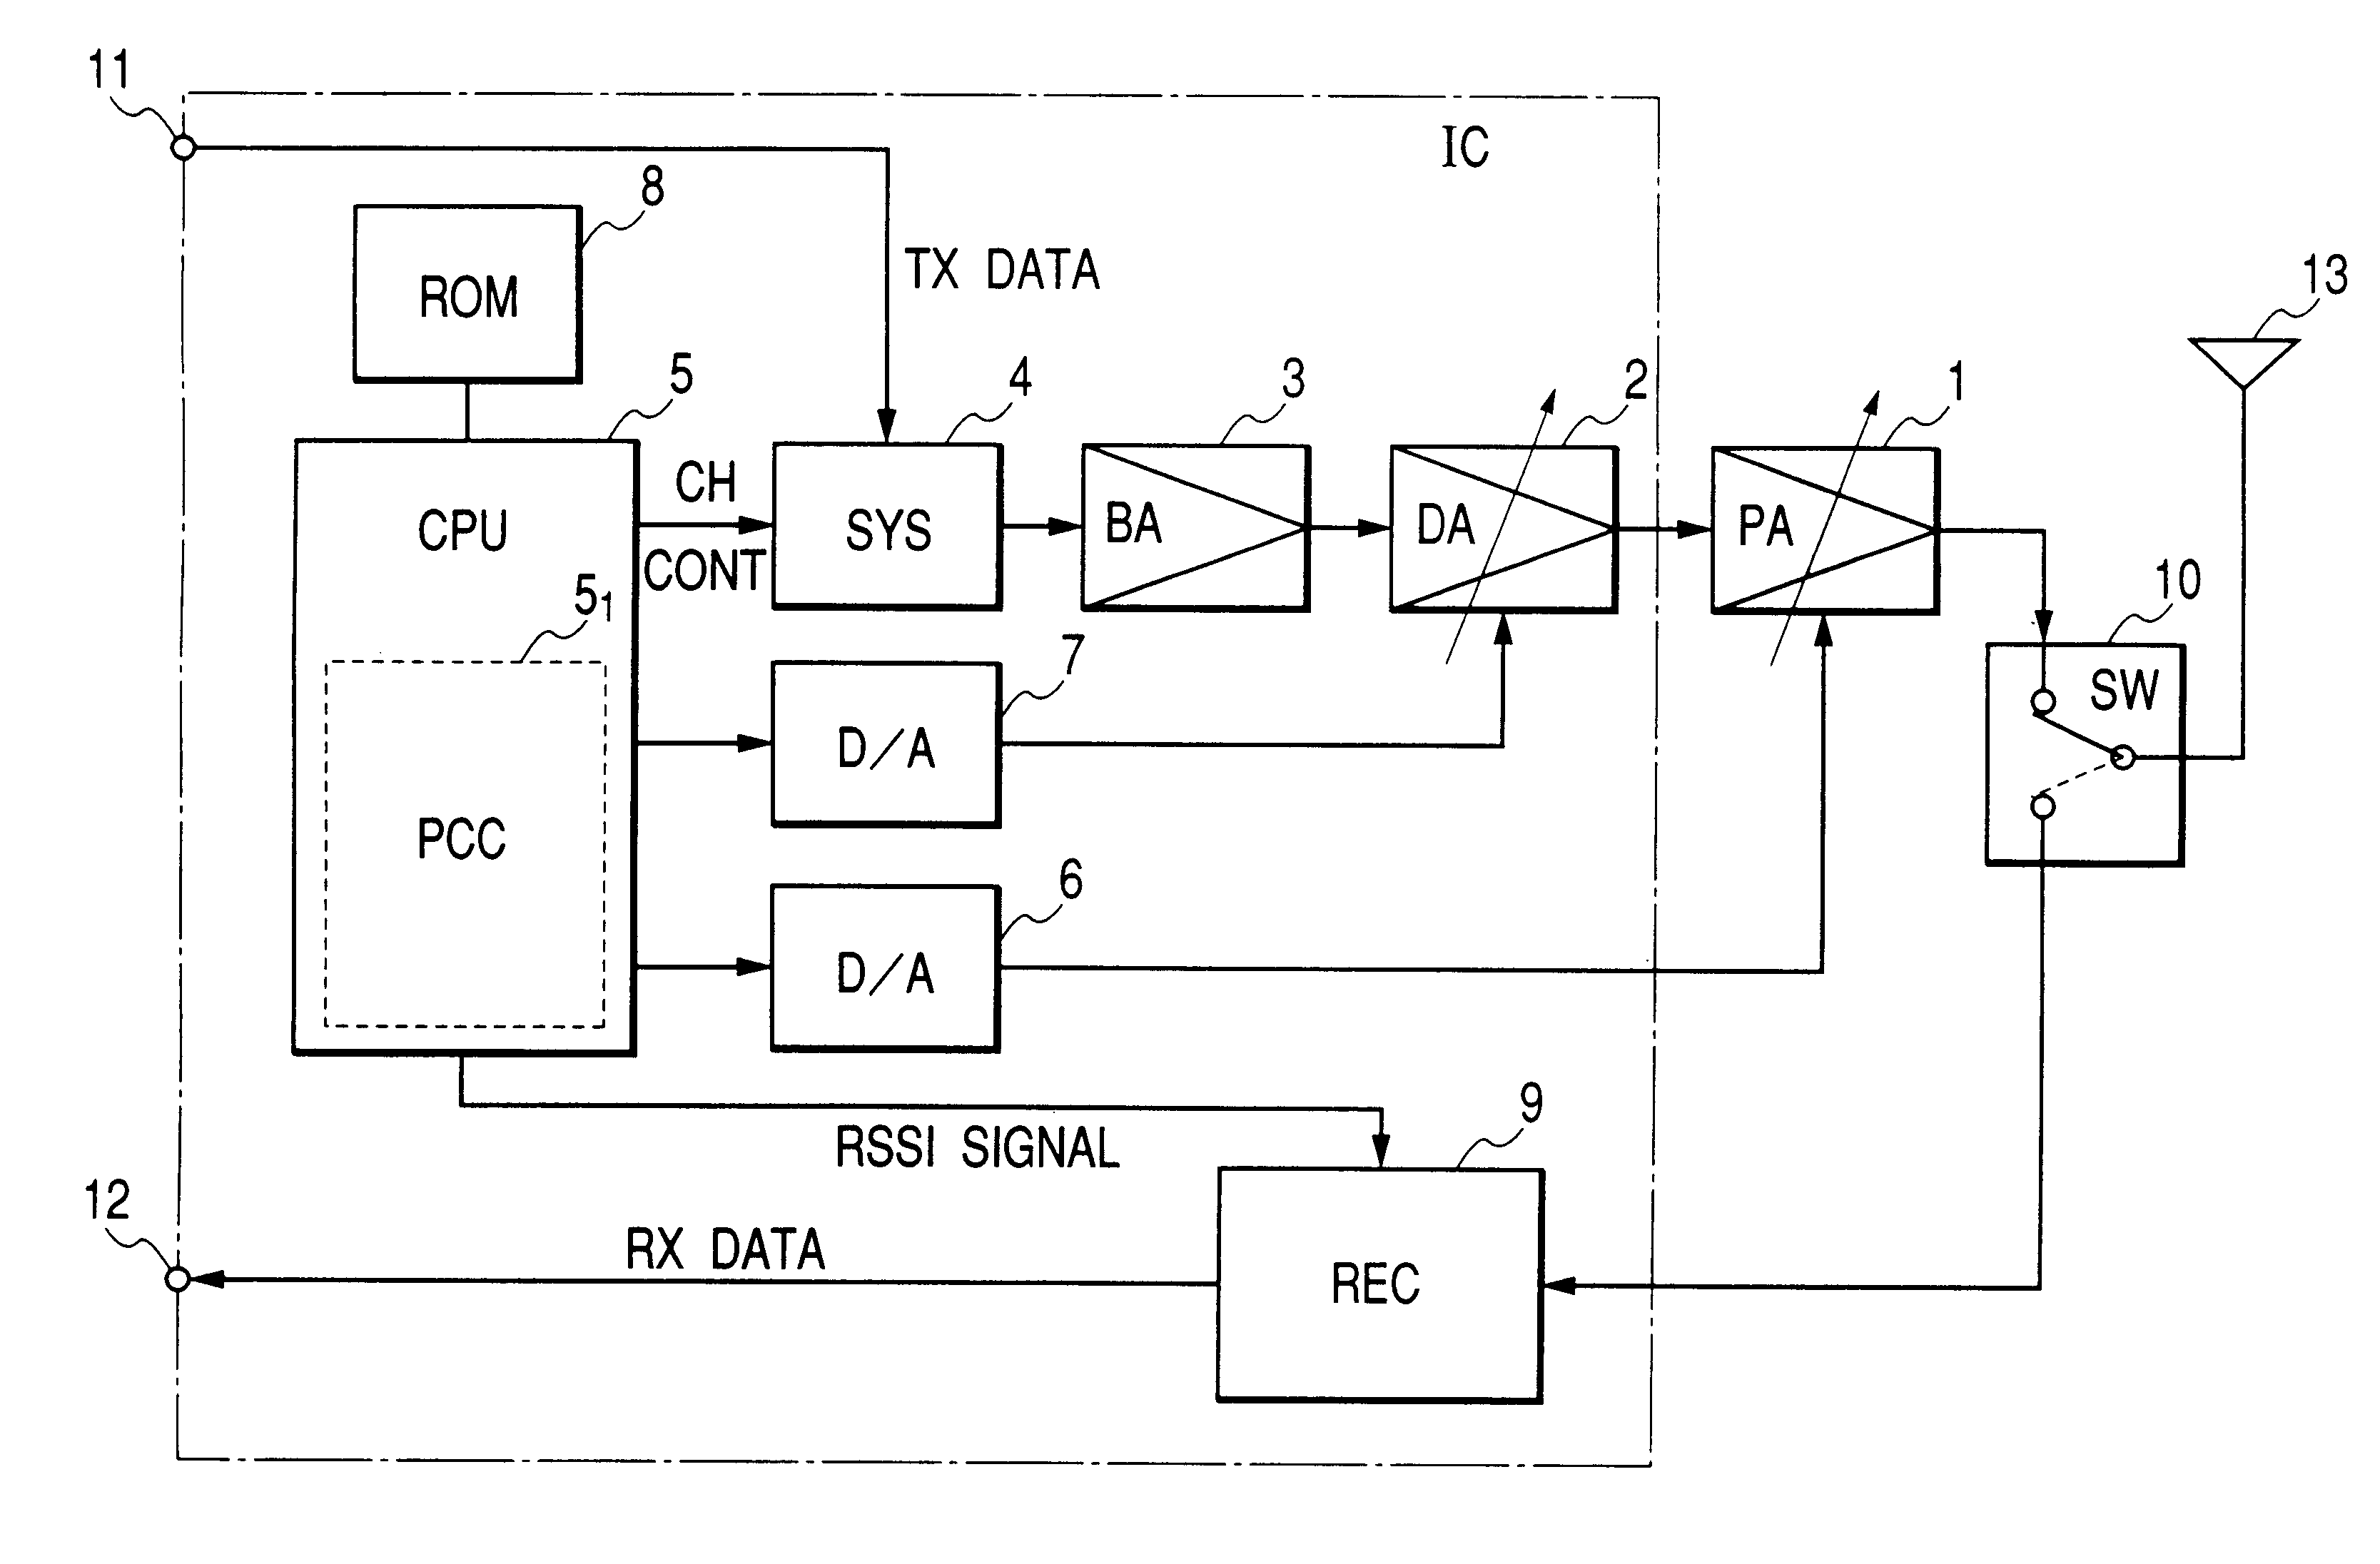 Transmitter adjusting output power